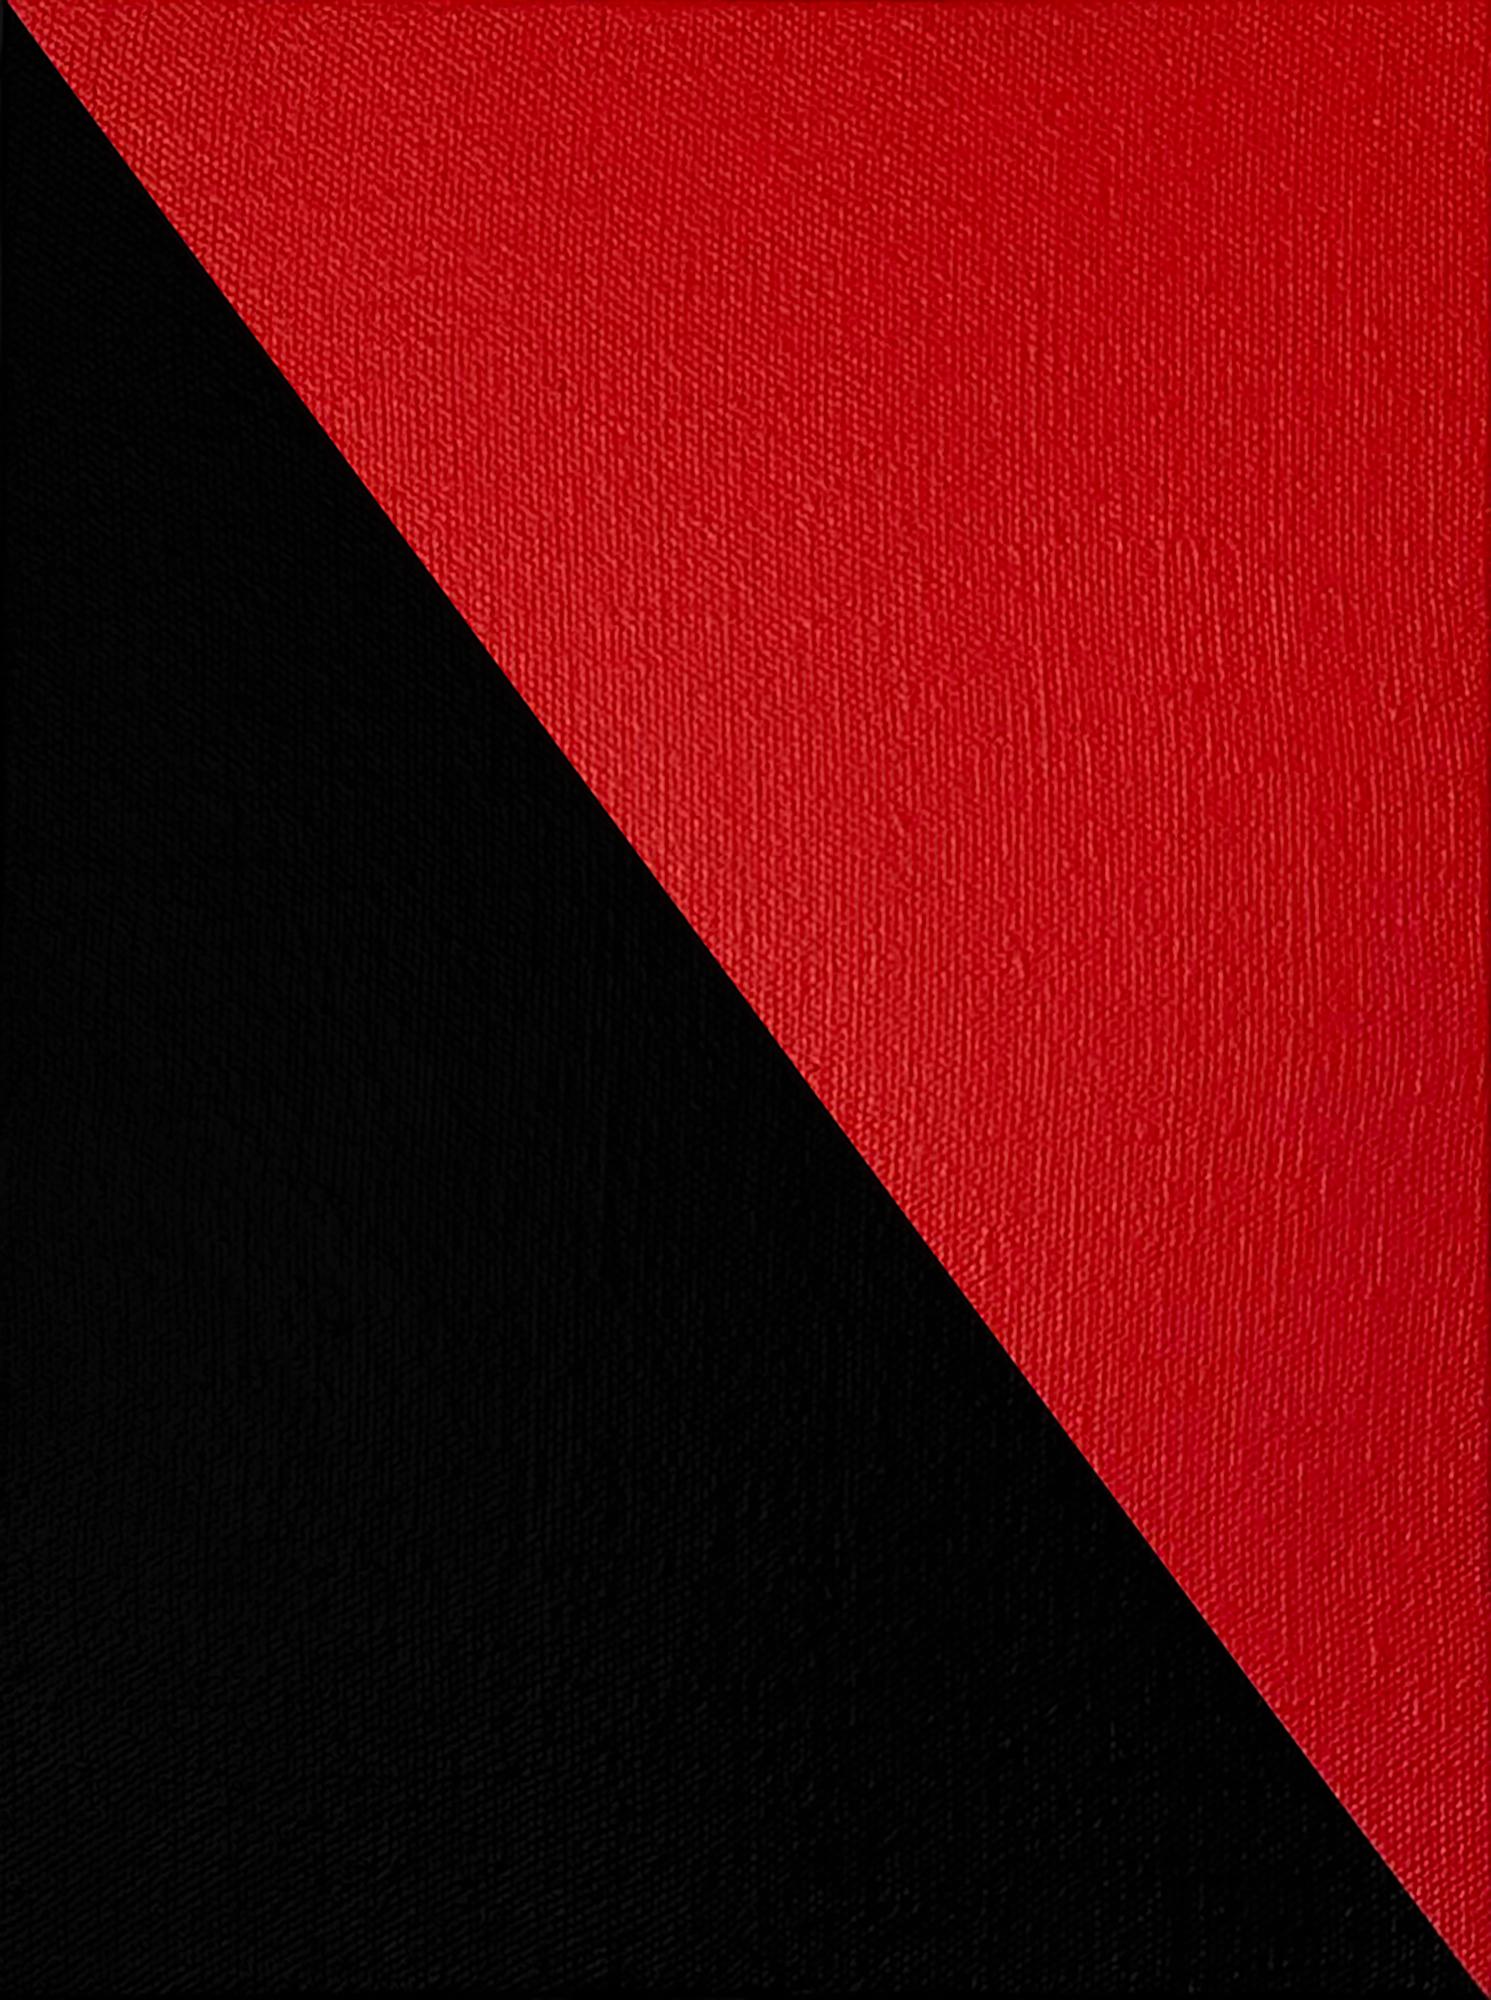 Sara Walton - Minimalist Abstract Painting "Split Rail" Red Black 